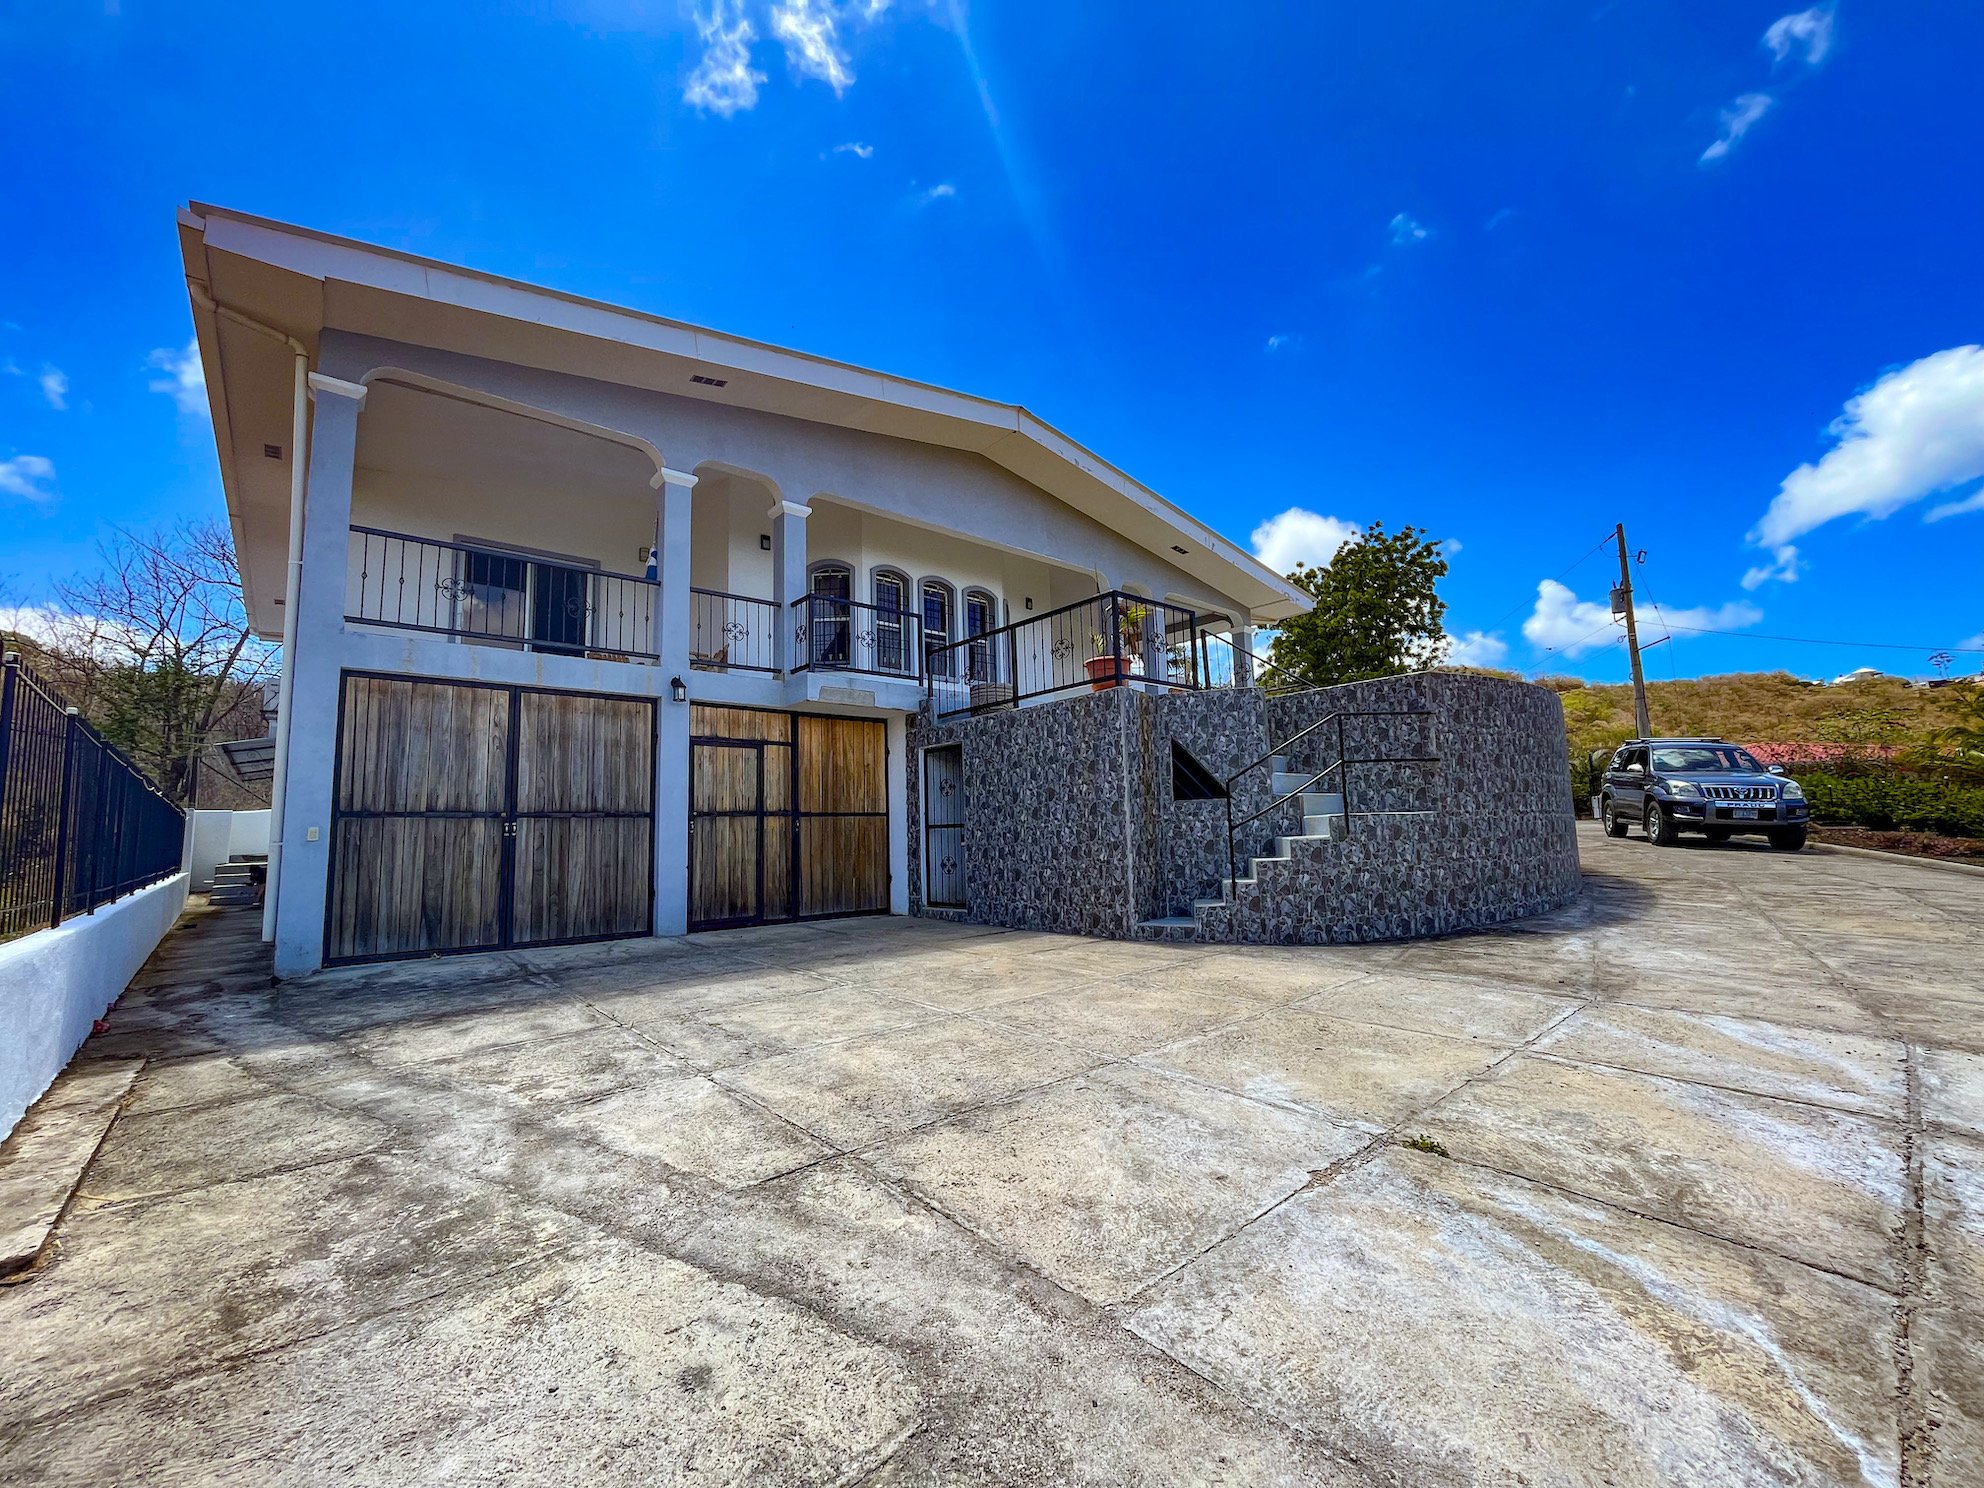 Real Estate for sale Little Bavaria Sur San Juan Del Sur Nicaragua 6.JPEG